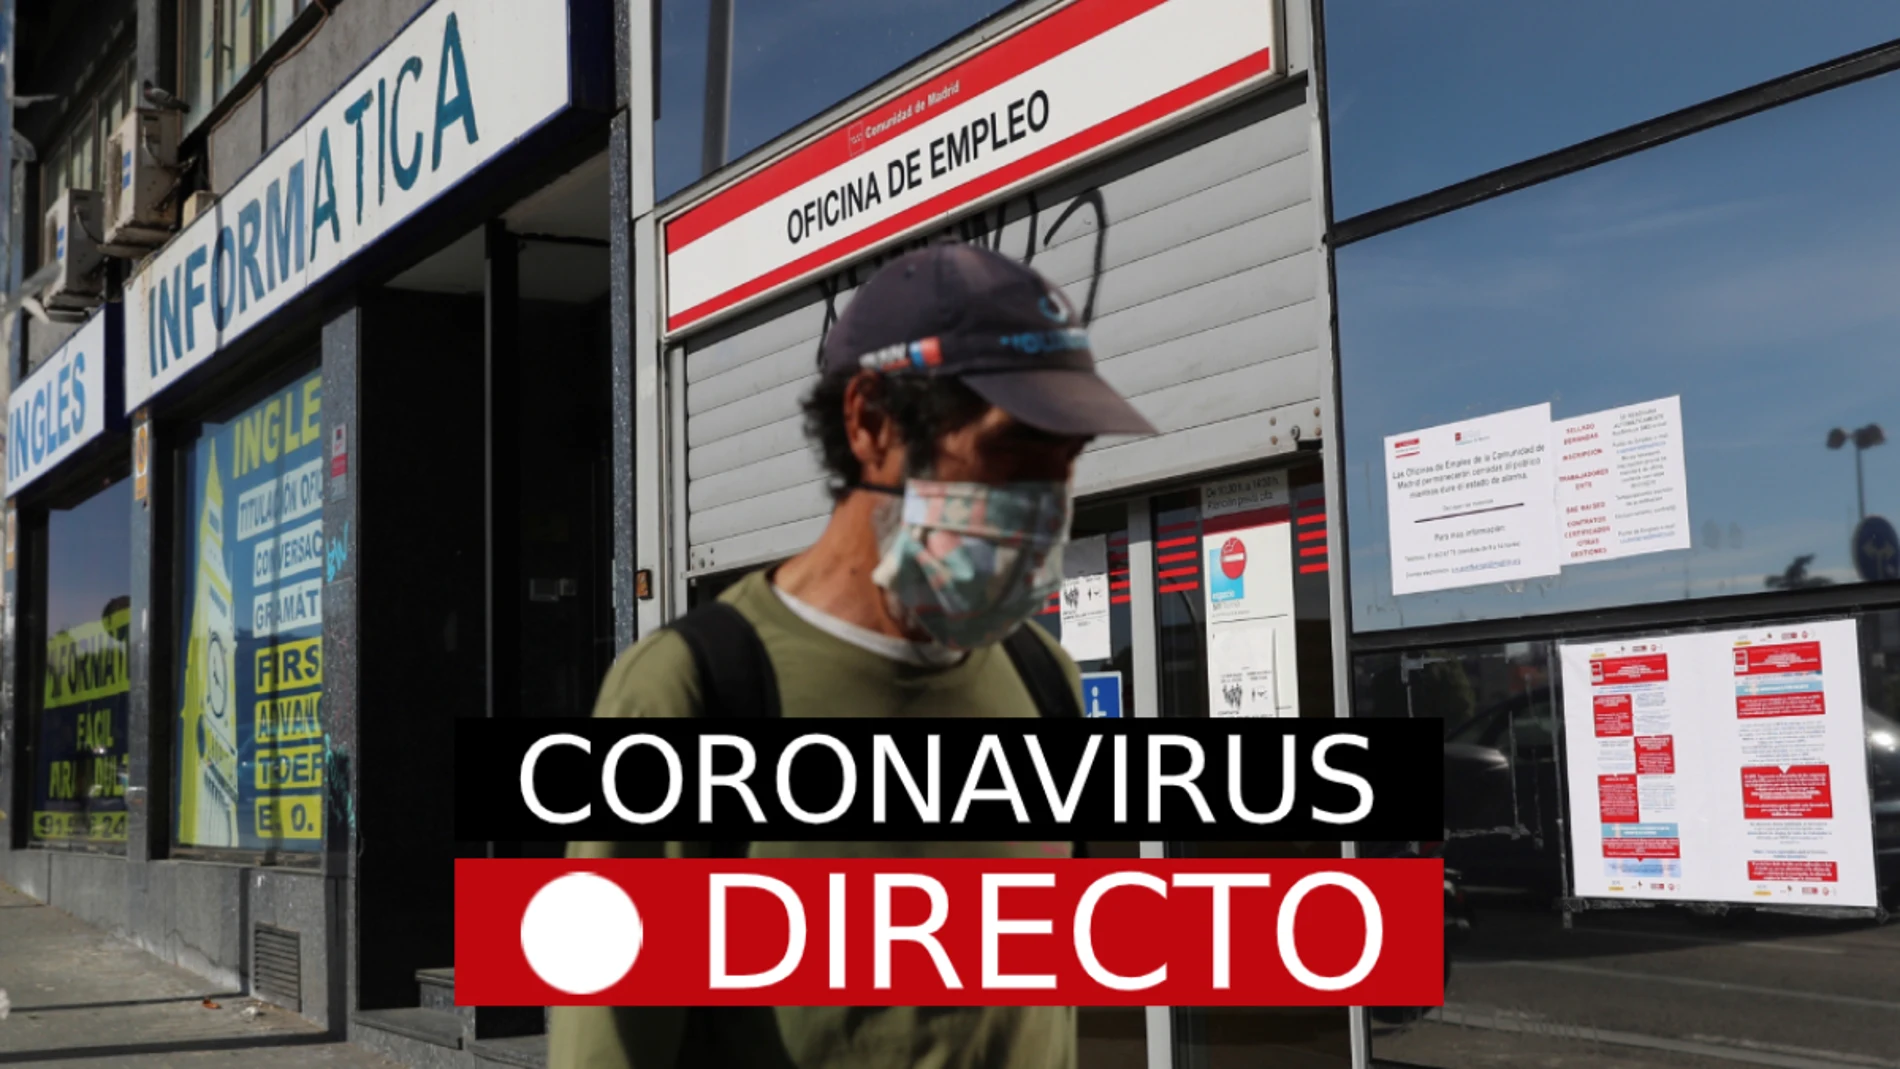 Coronavirus España: Casos, muertos, y cambio de fase de desescalada, en directo